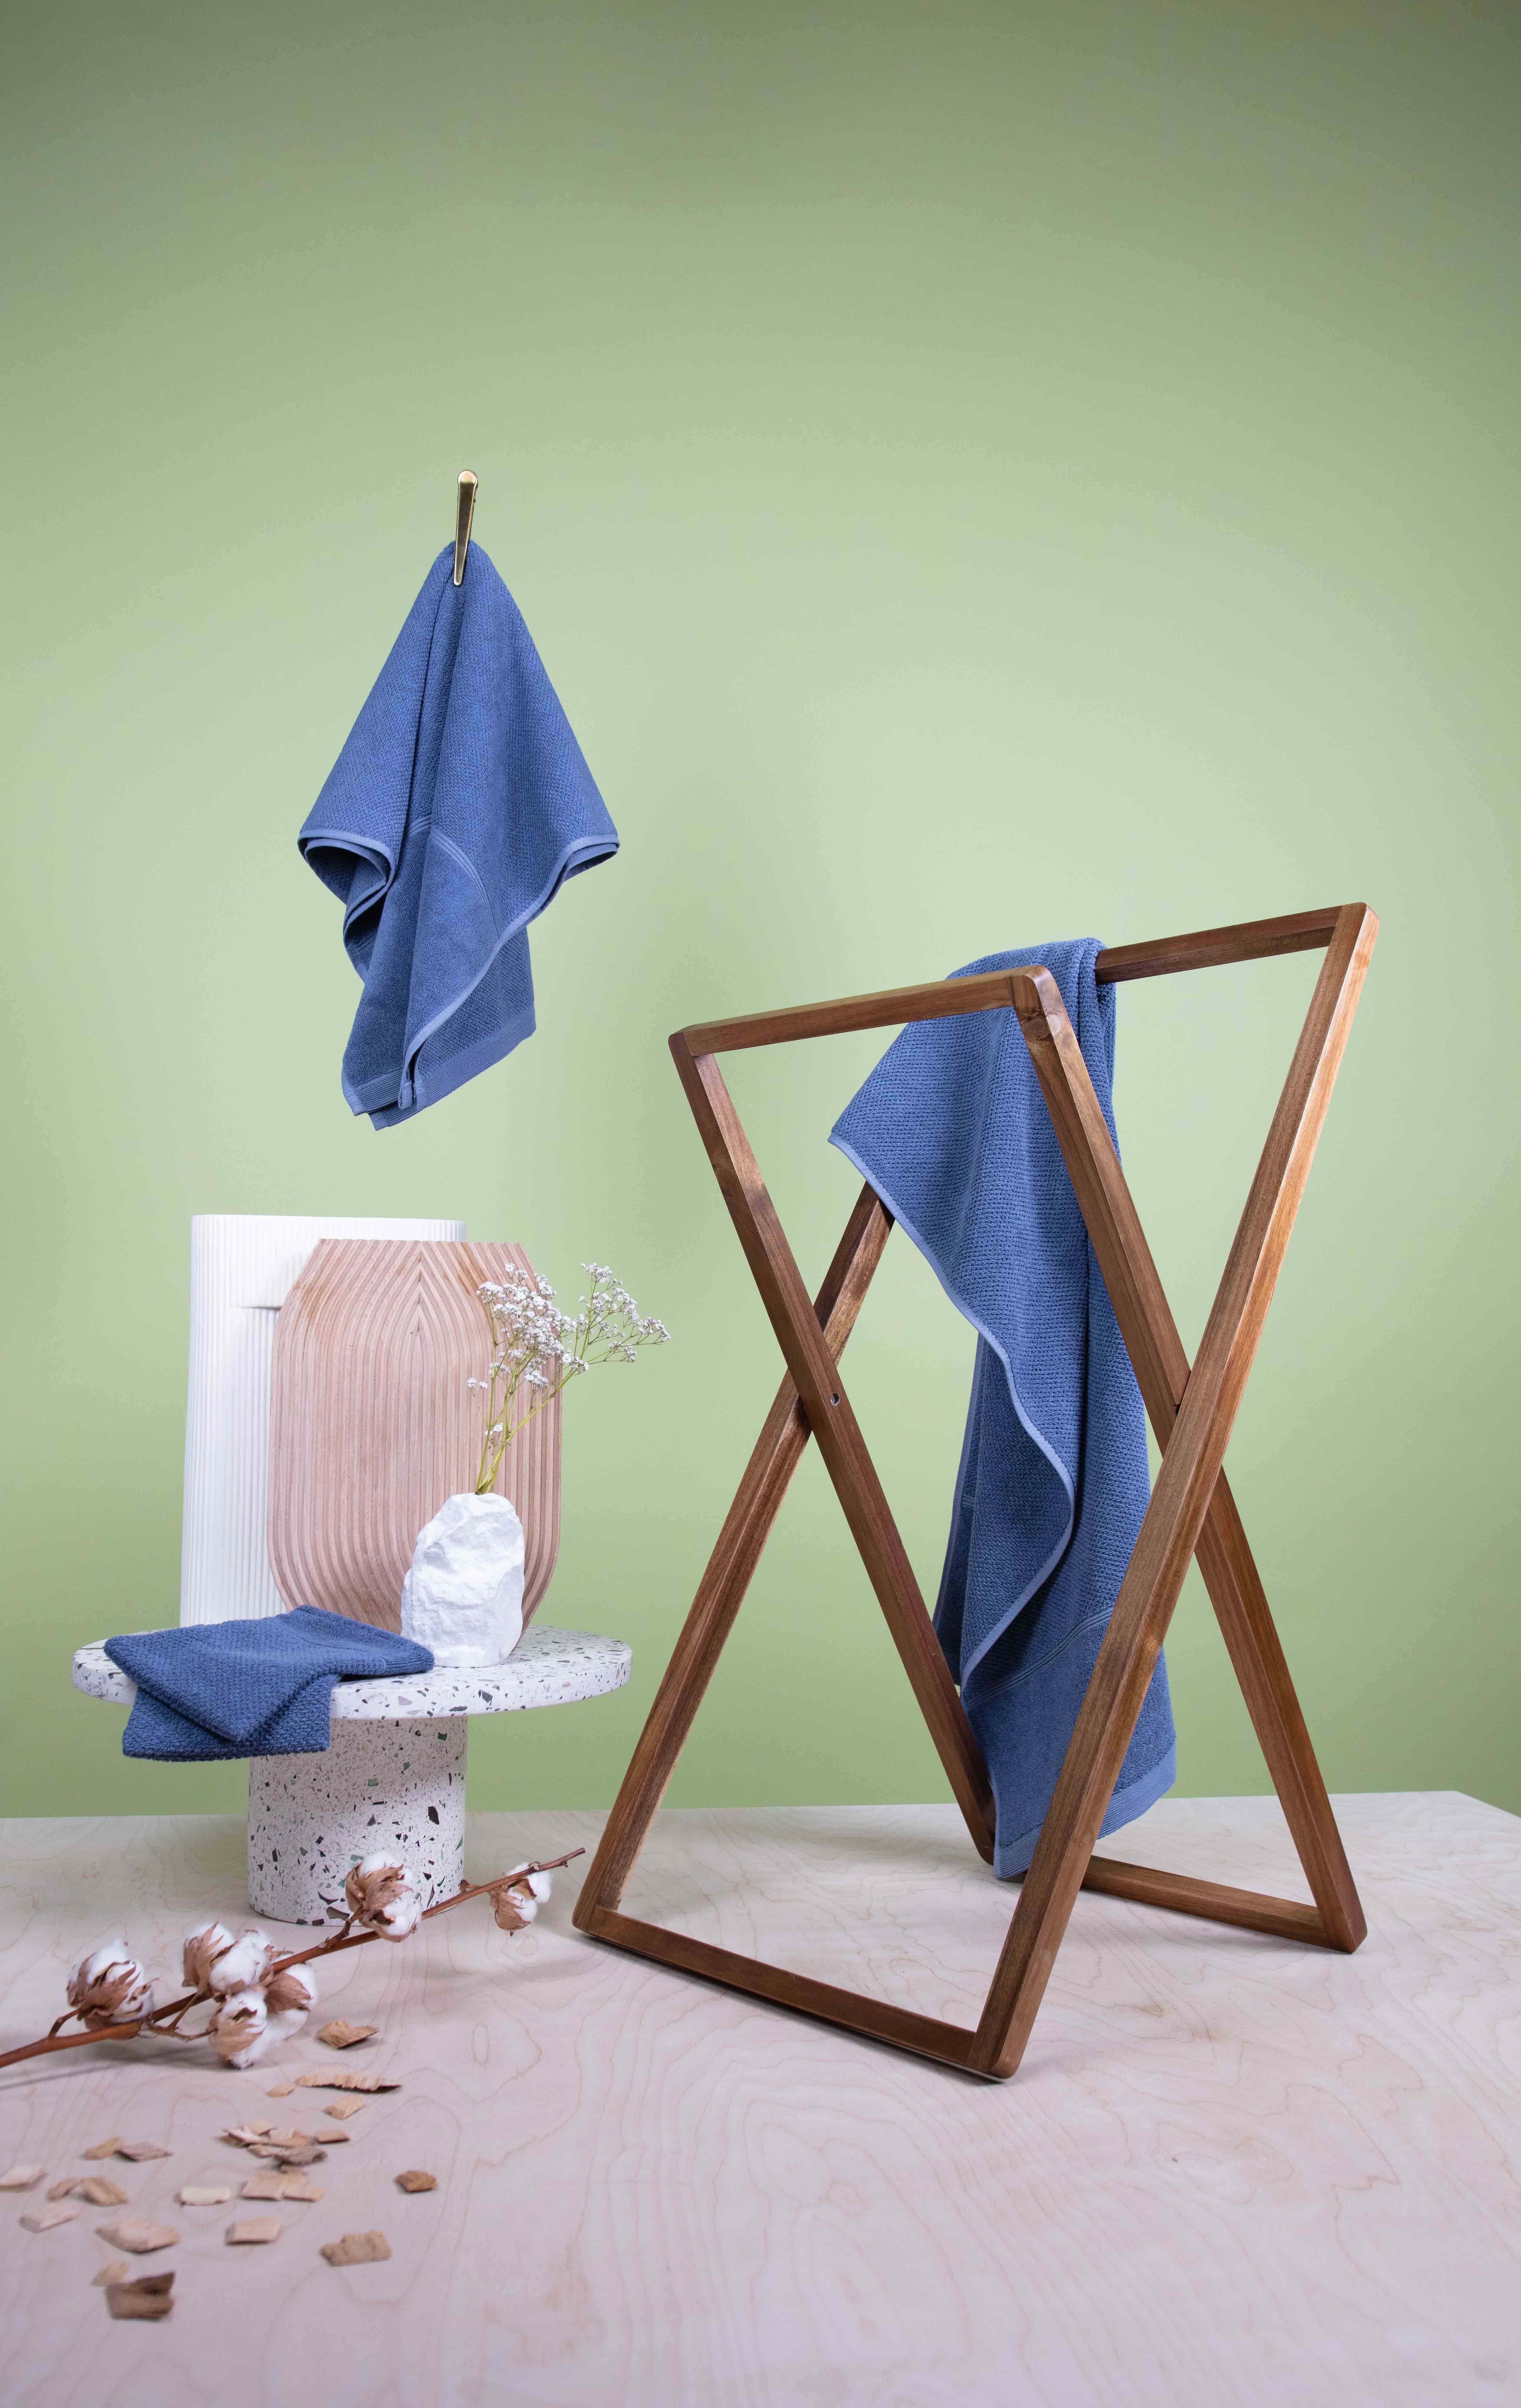 Kushel Handtücher The Set, trocknet Daily Blue hergestellt Dove fair umweltfreundlich, weich, schnell, bleibt